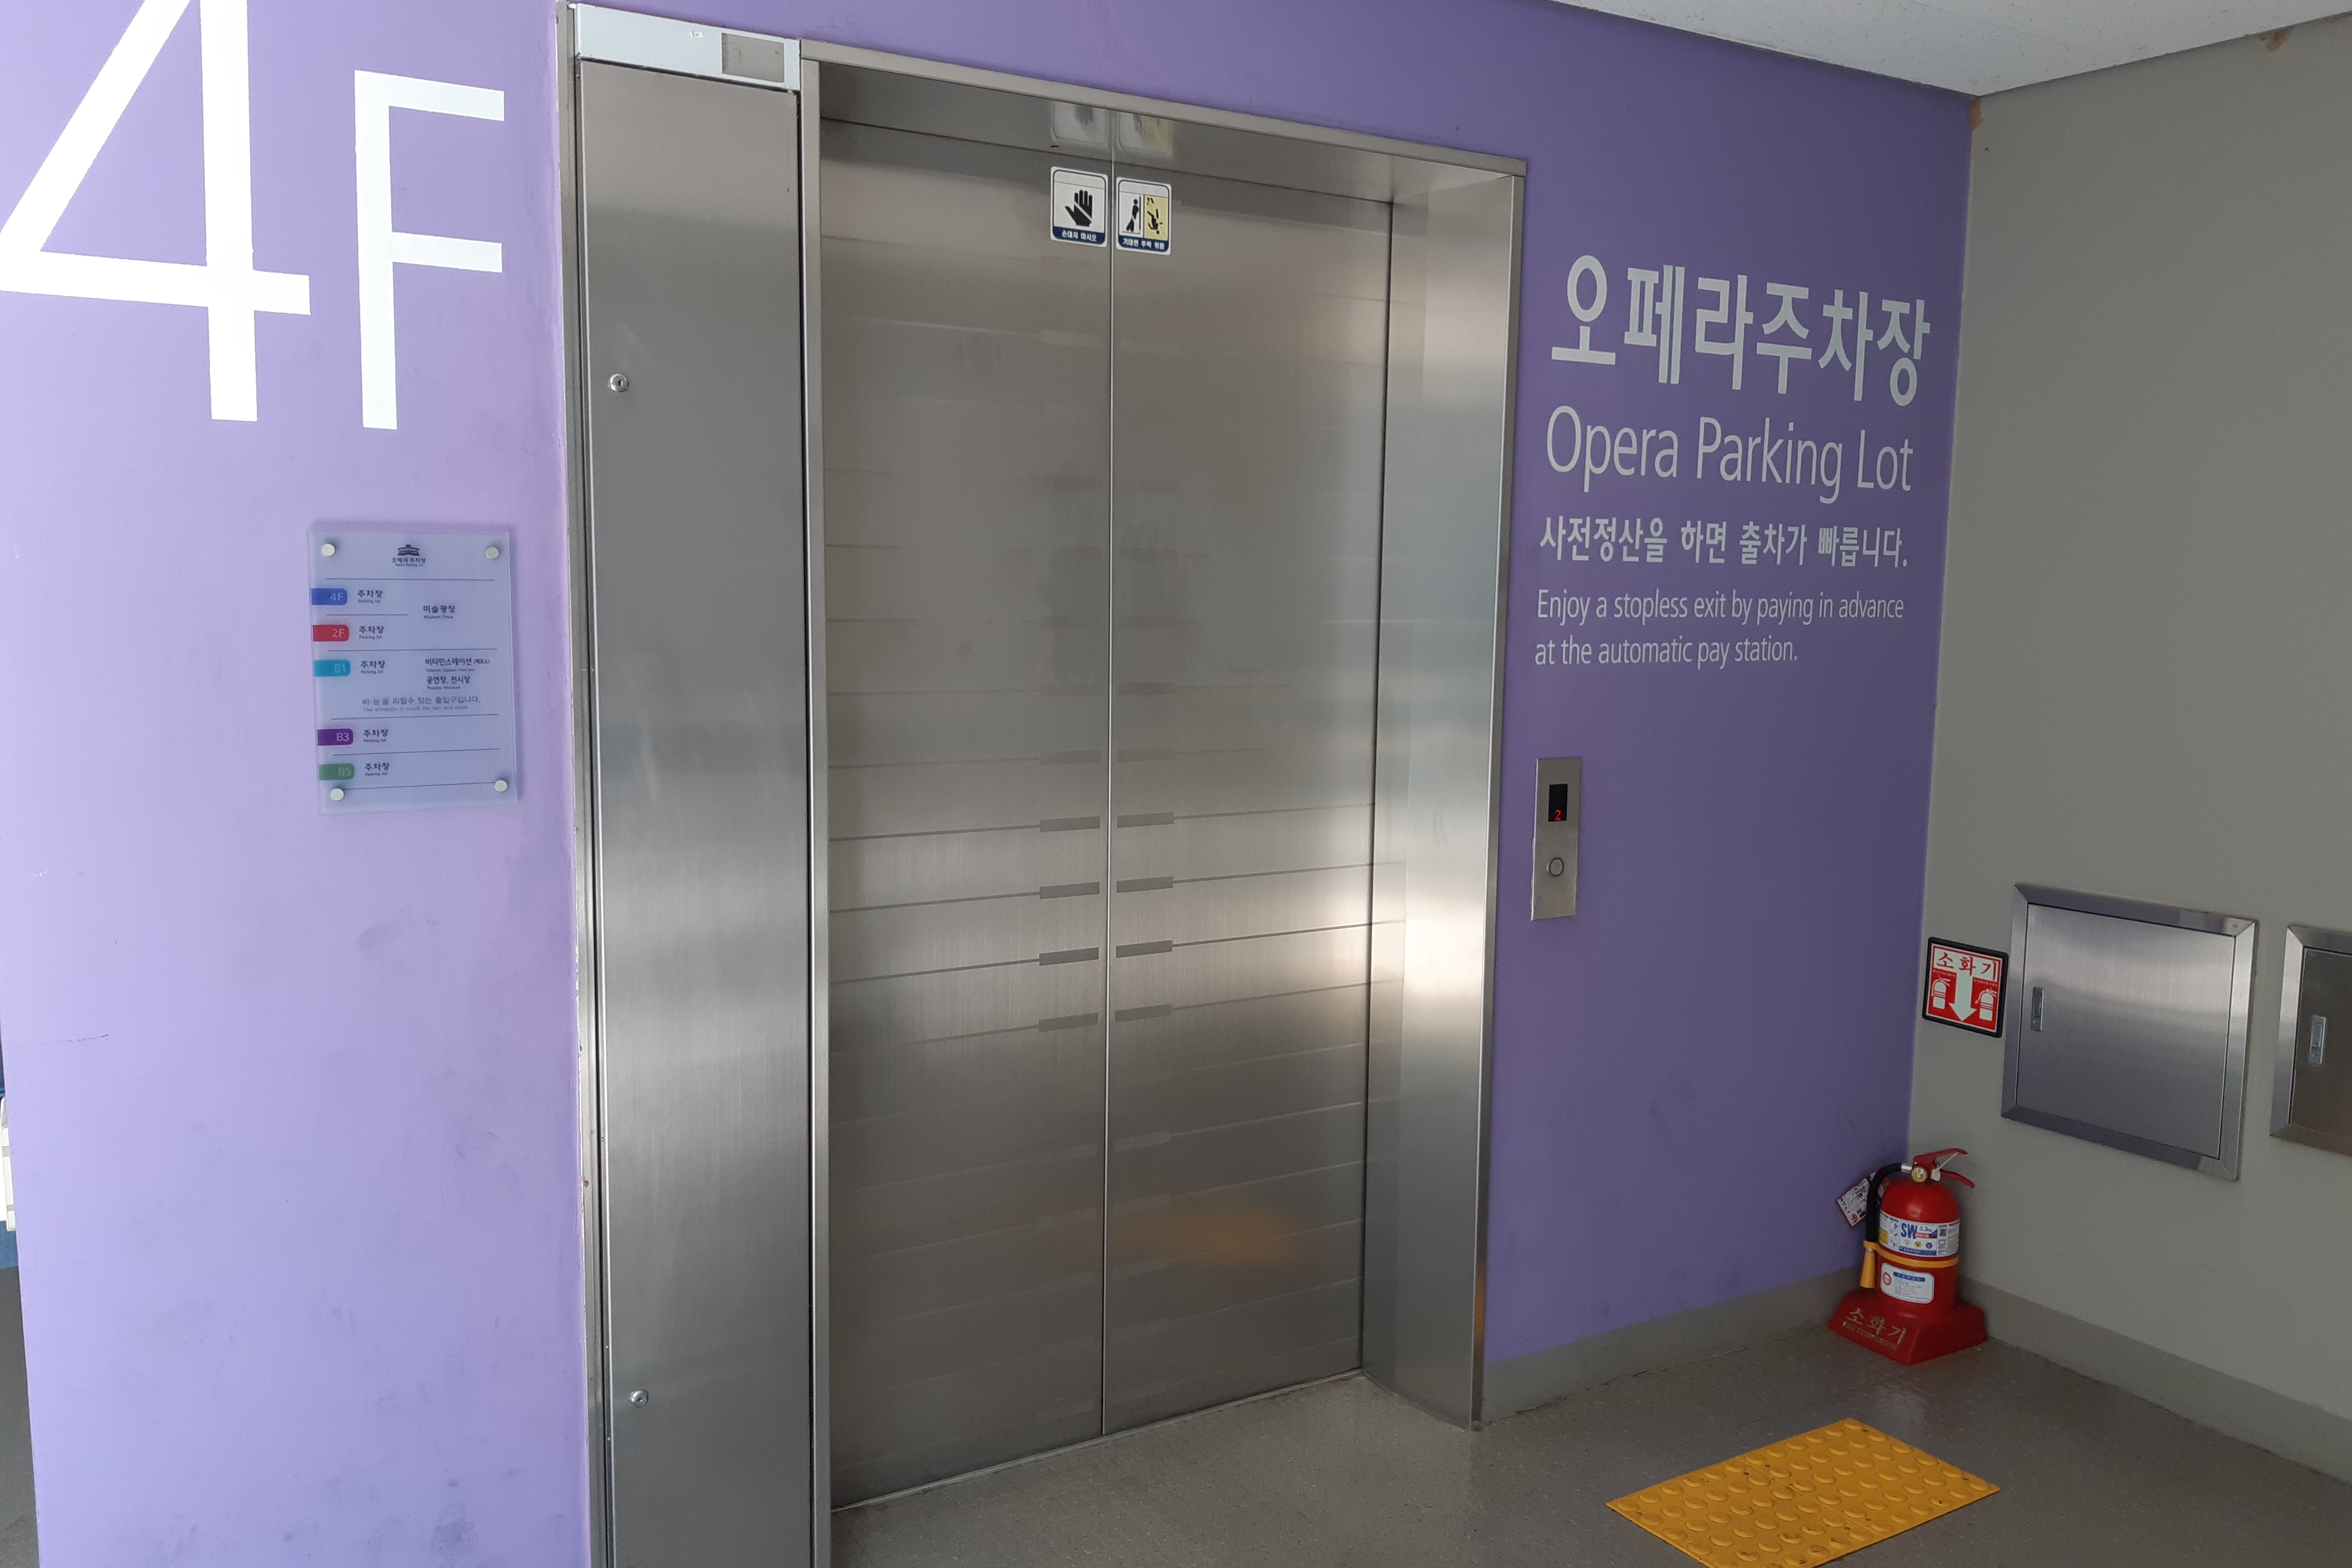 Elevator0 : Exterior view of the elevator 